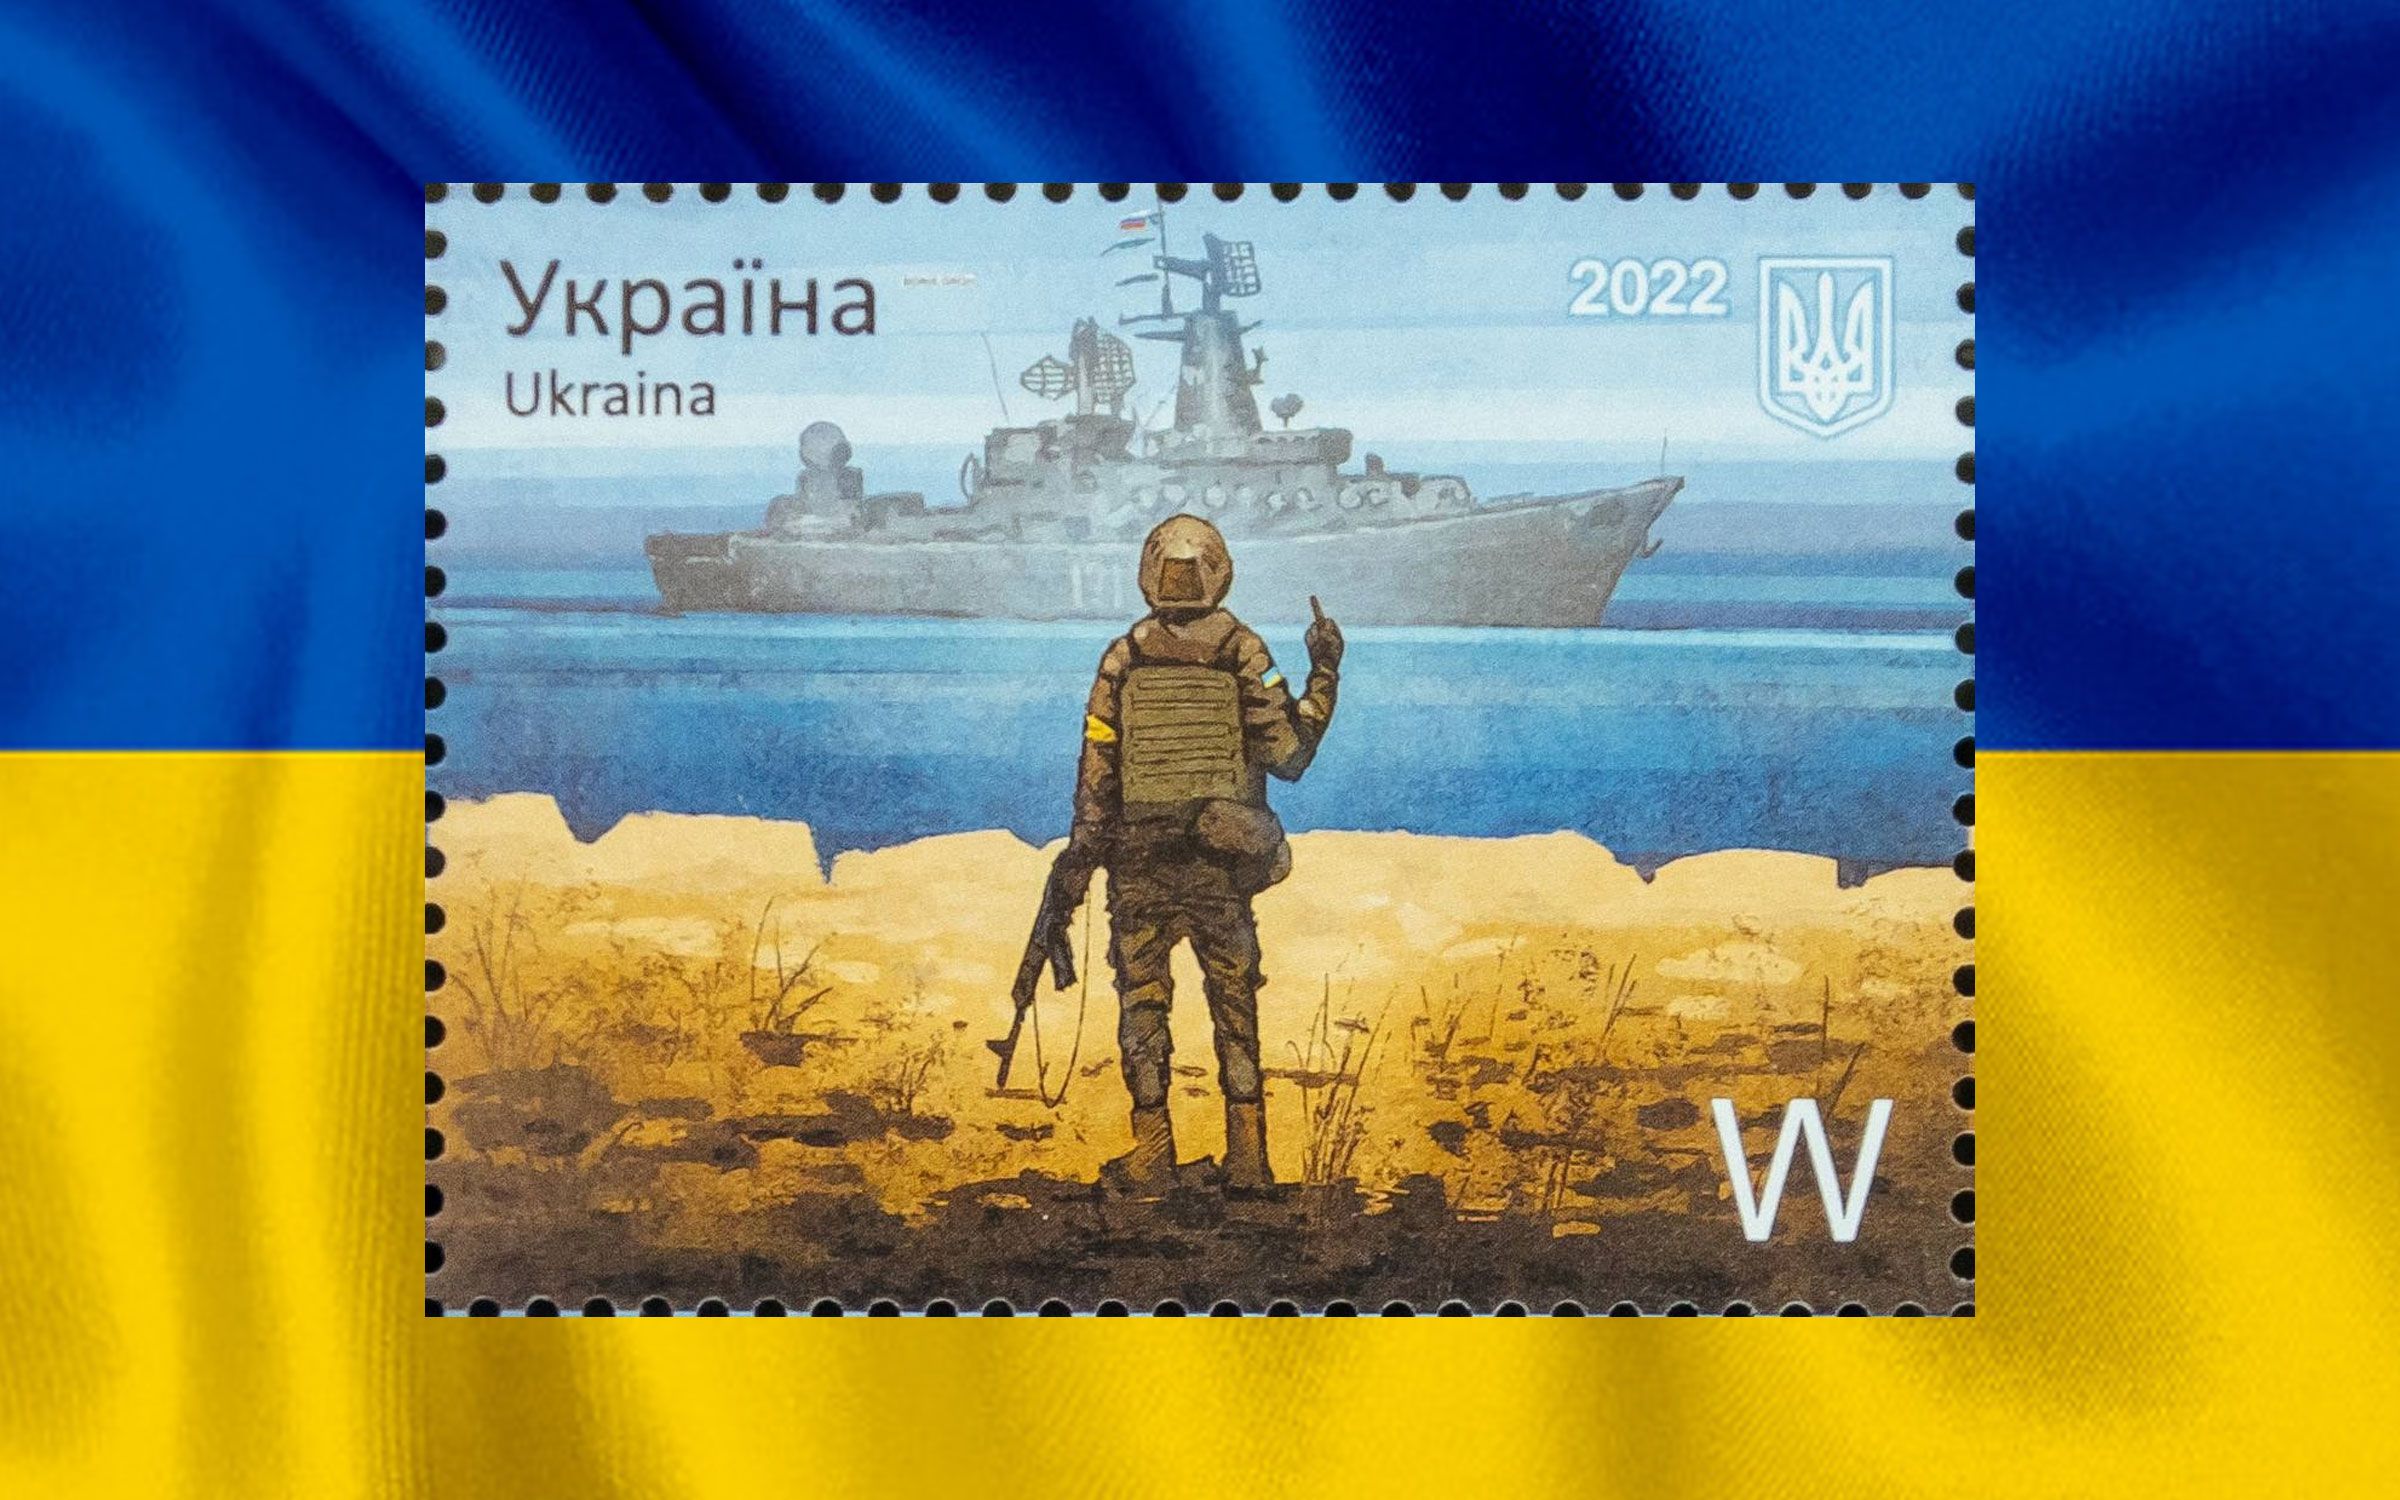 Wartime symbolic stamp from Ukraine